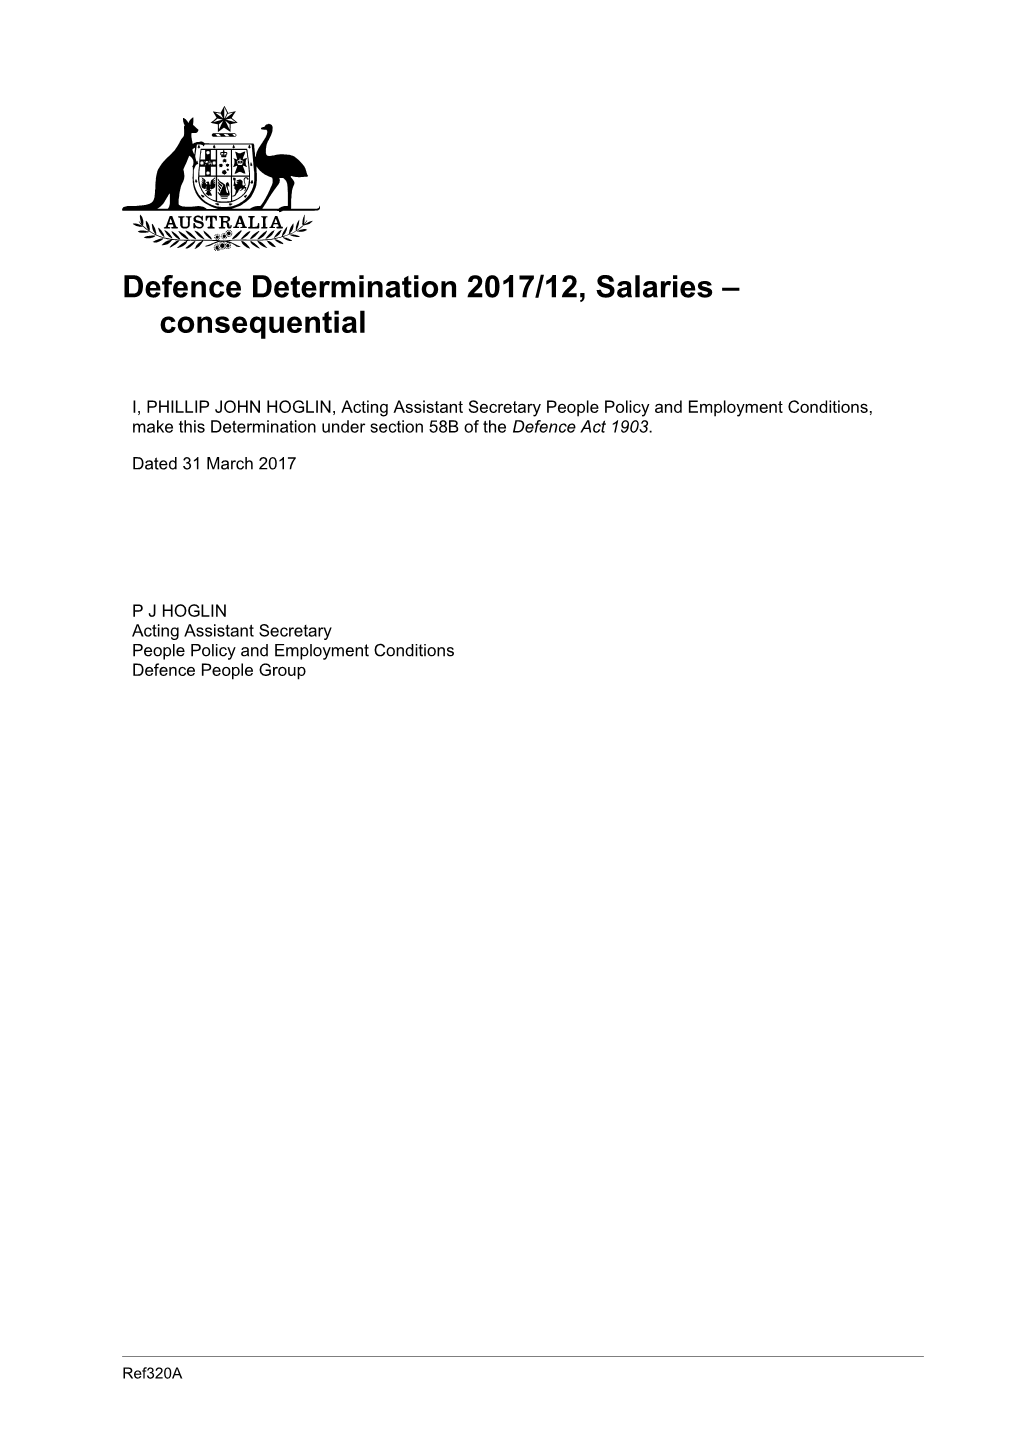 Defence Determination 2017/12, Salaries Consequential